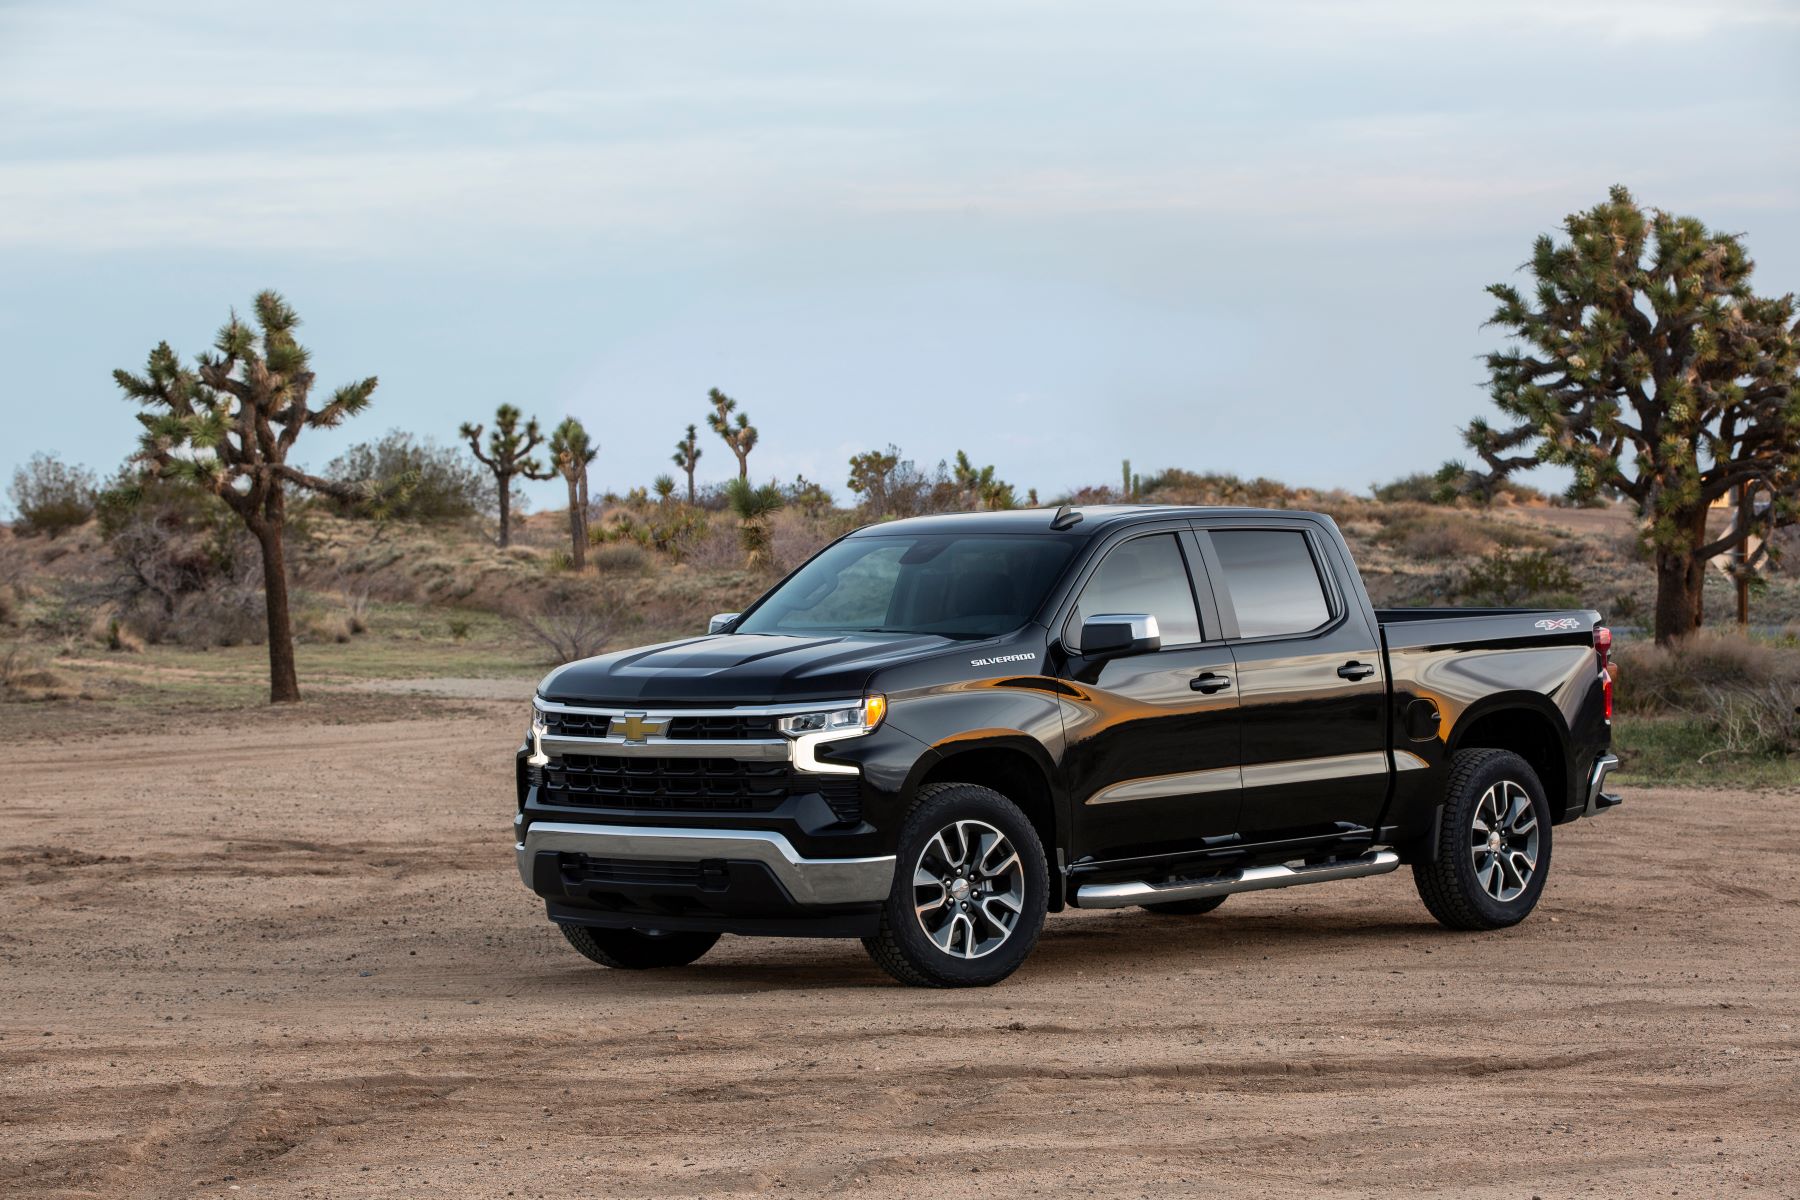 A black 2022 Chevrolet Silverado LT full-size pickup truck parked on a dirt plain in the desert